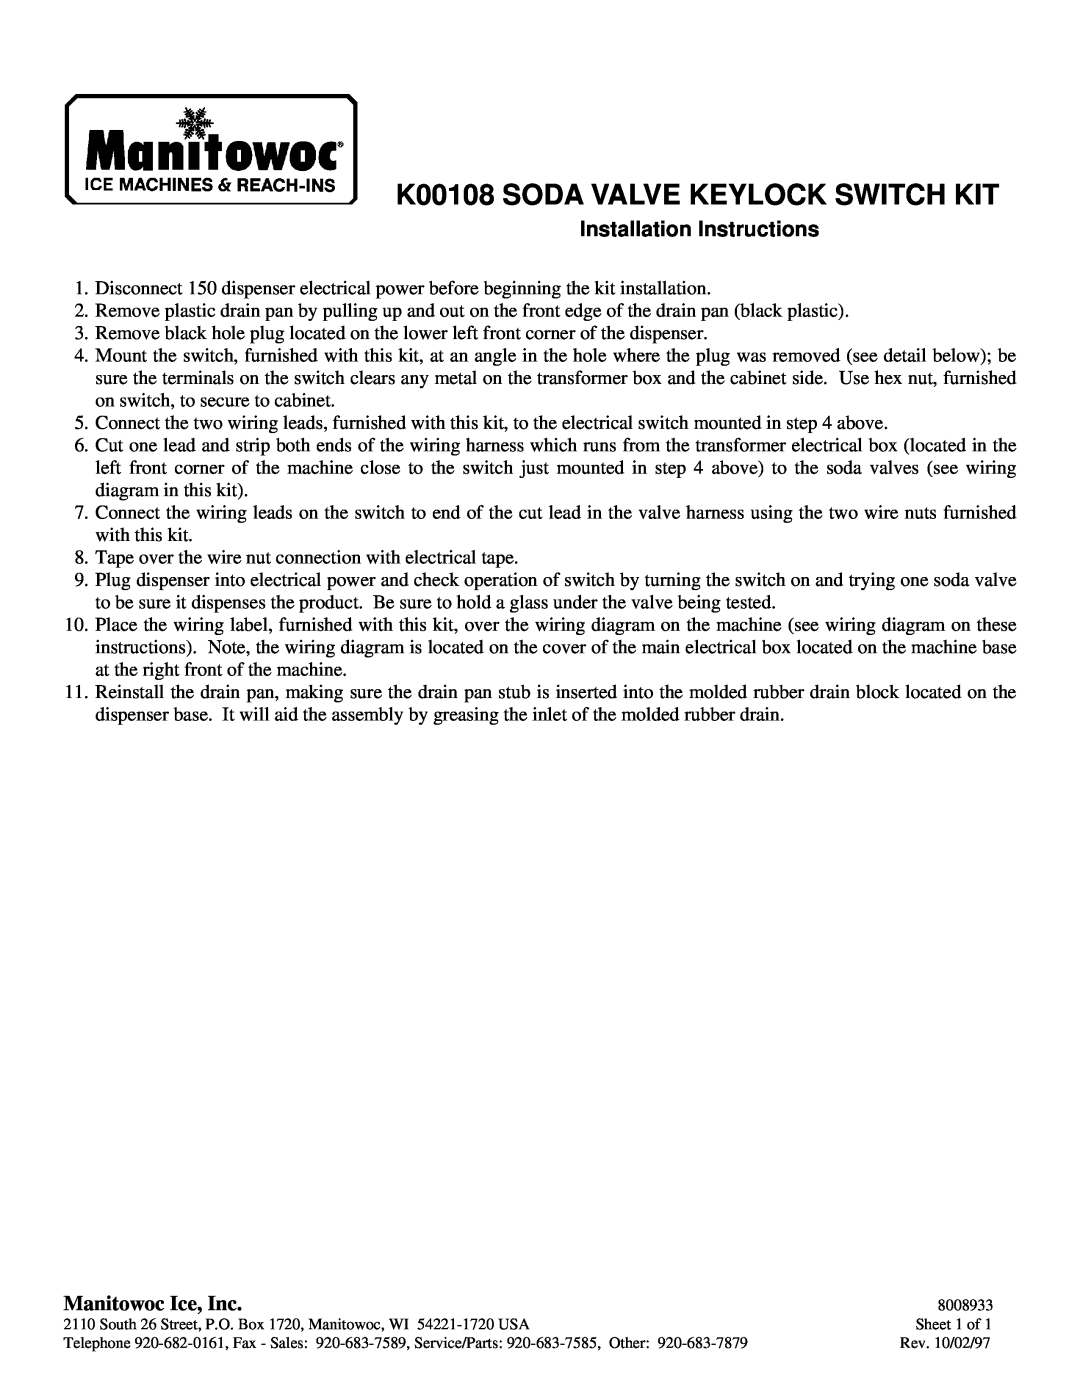 Manitowoc Ice installation instructions K00108 SODA VALVE KEYLOCK SWITCH KIT, Installation Instructions 